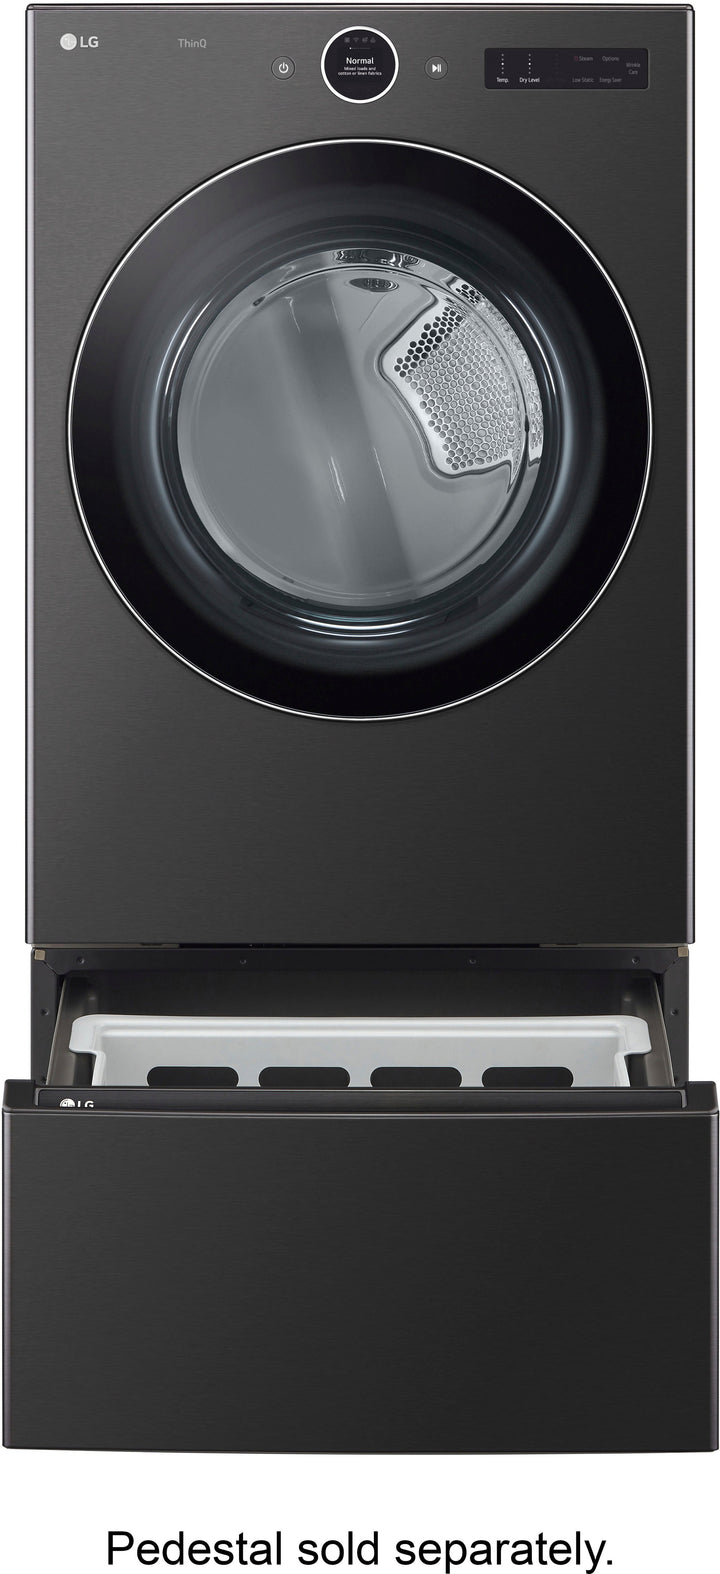 LG - 7.4 Cu. Ft. Stackable Smart Gas Dryer with TurboSteam - Black steel_6